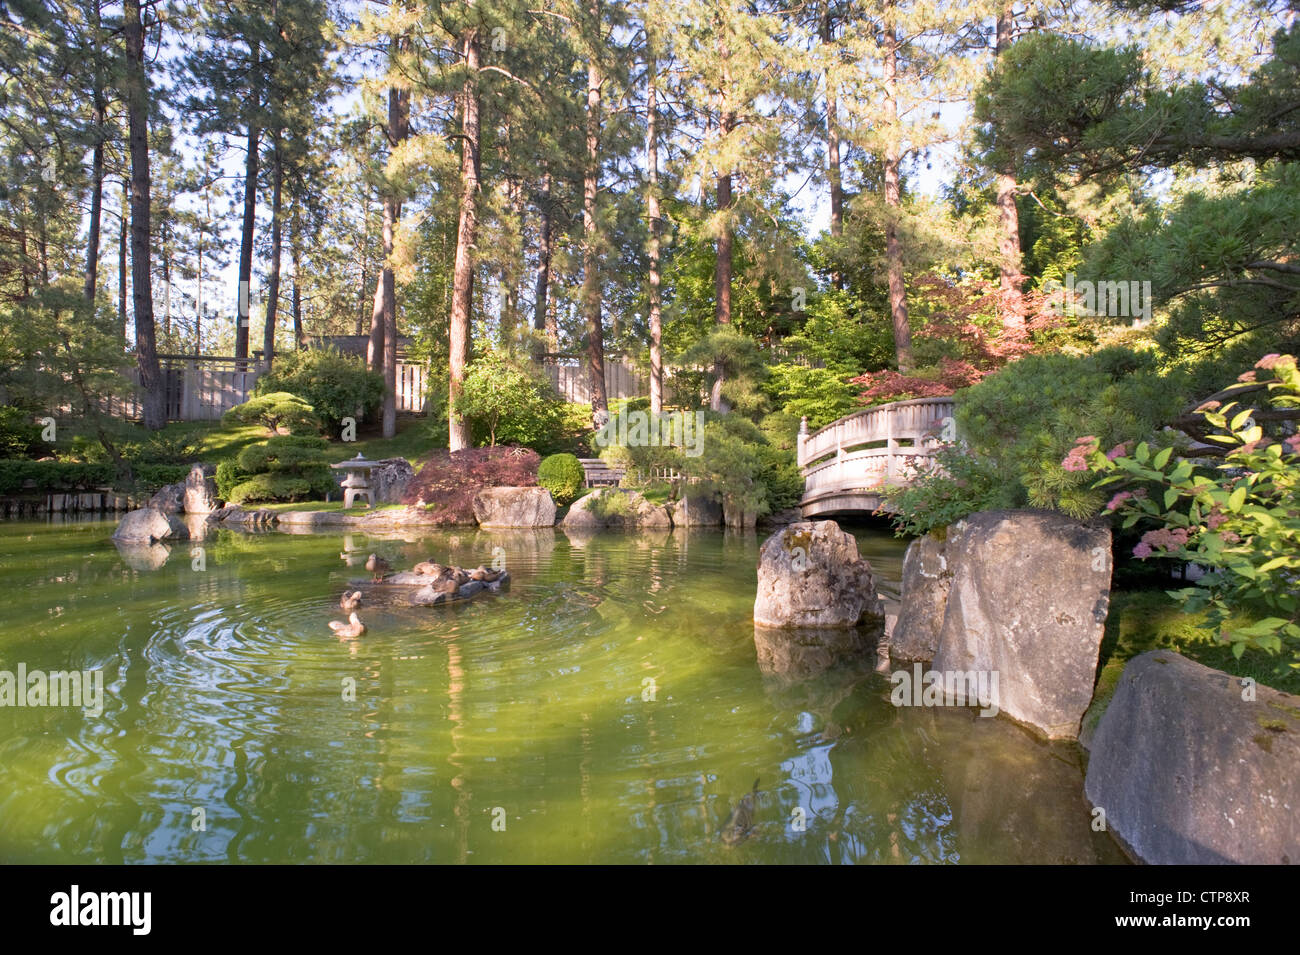 The Restful Nishinomiya Japanese Garden At Manito Park And